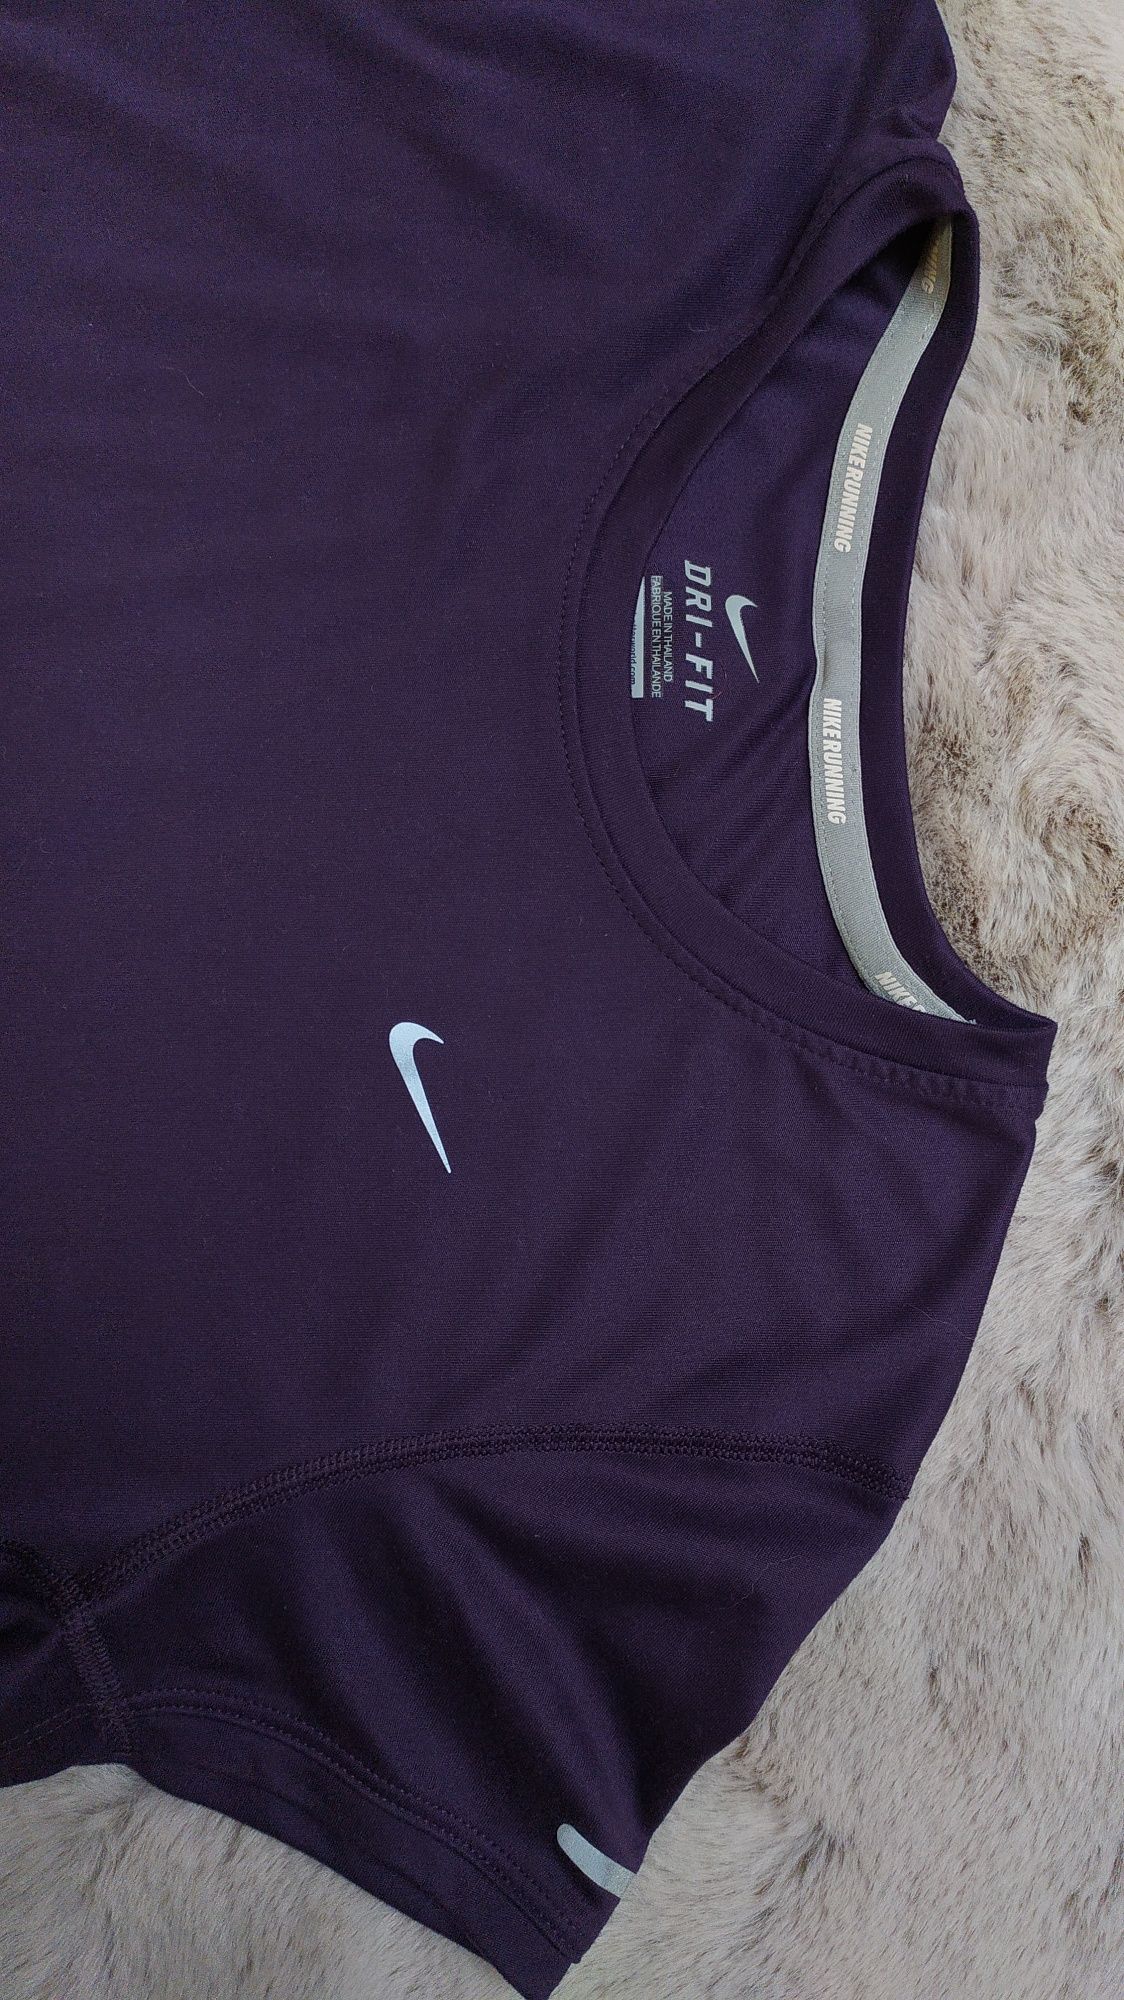 Bluza, koszulka, bluzka sportowa, T-shirt, Nike, Dri-Fit